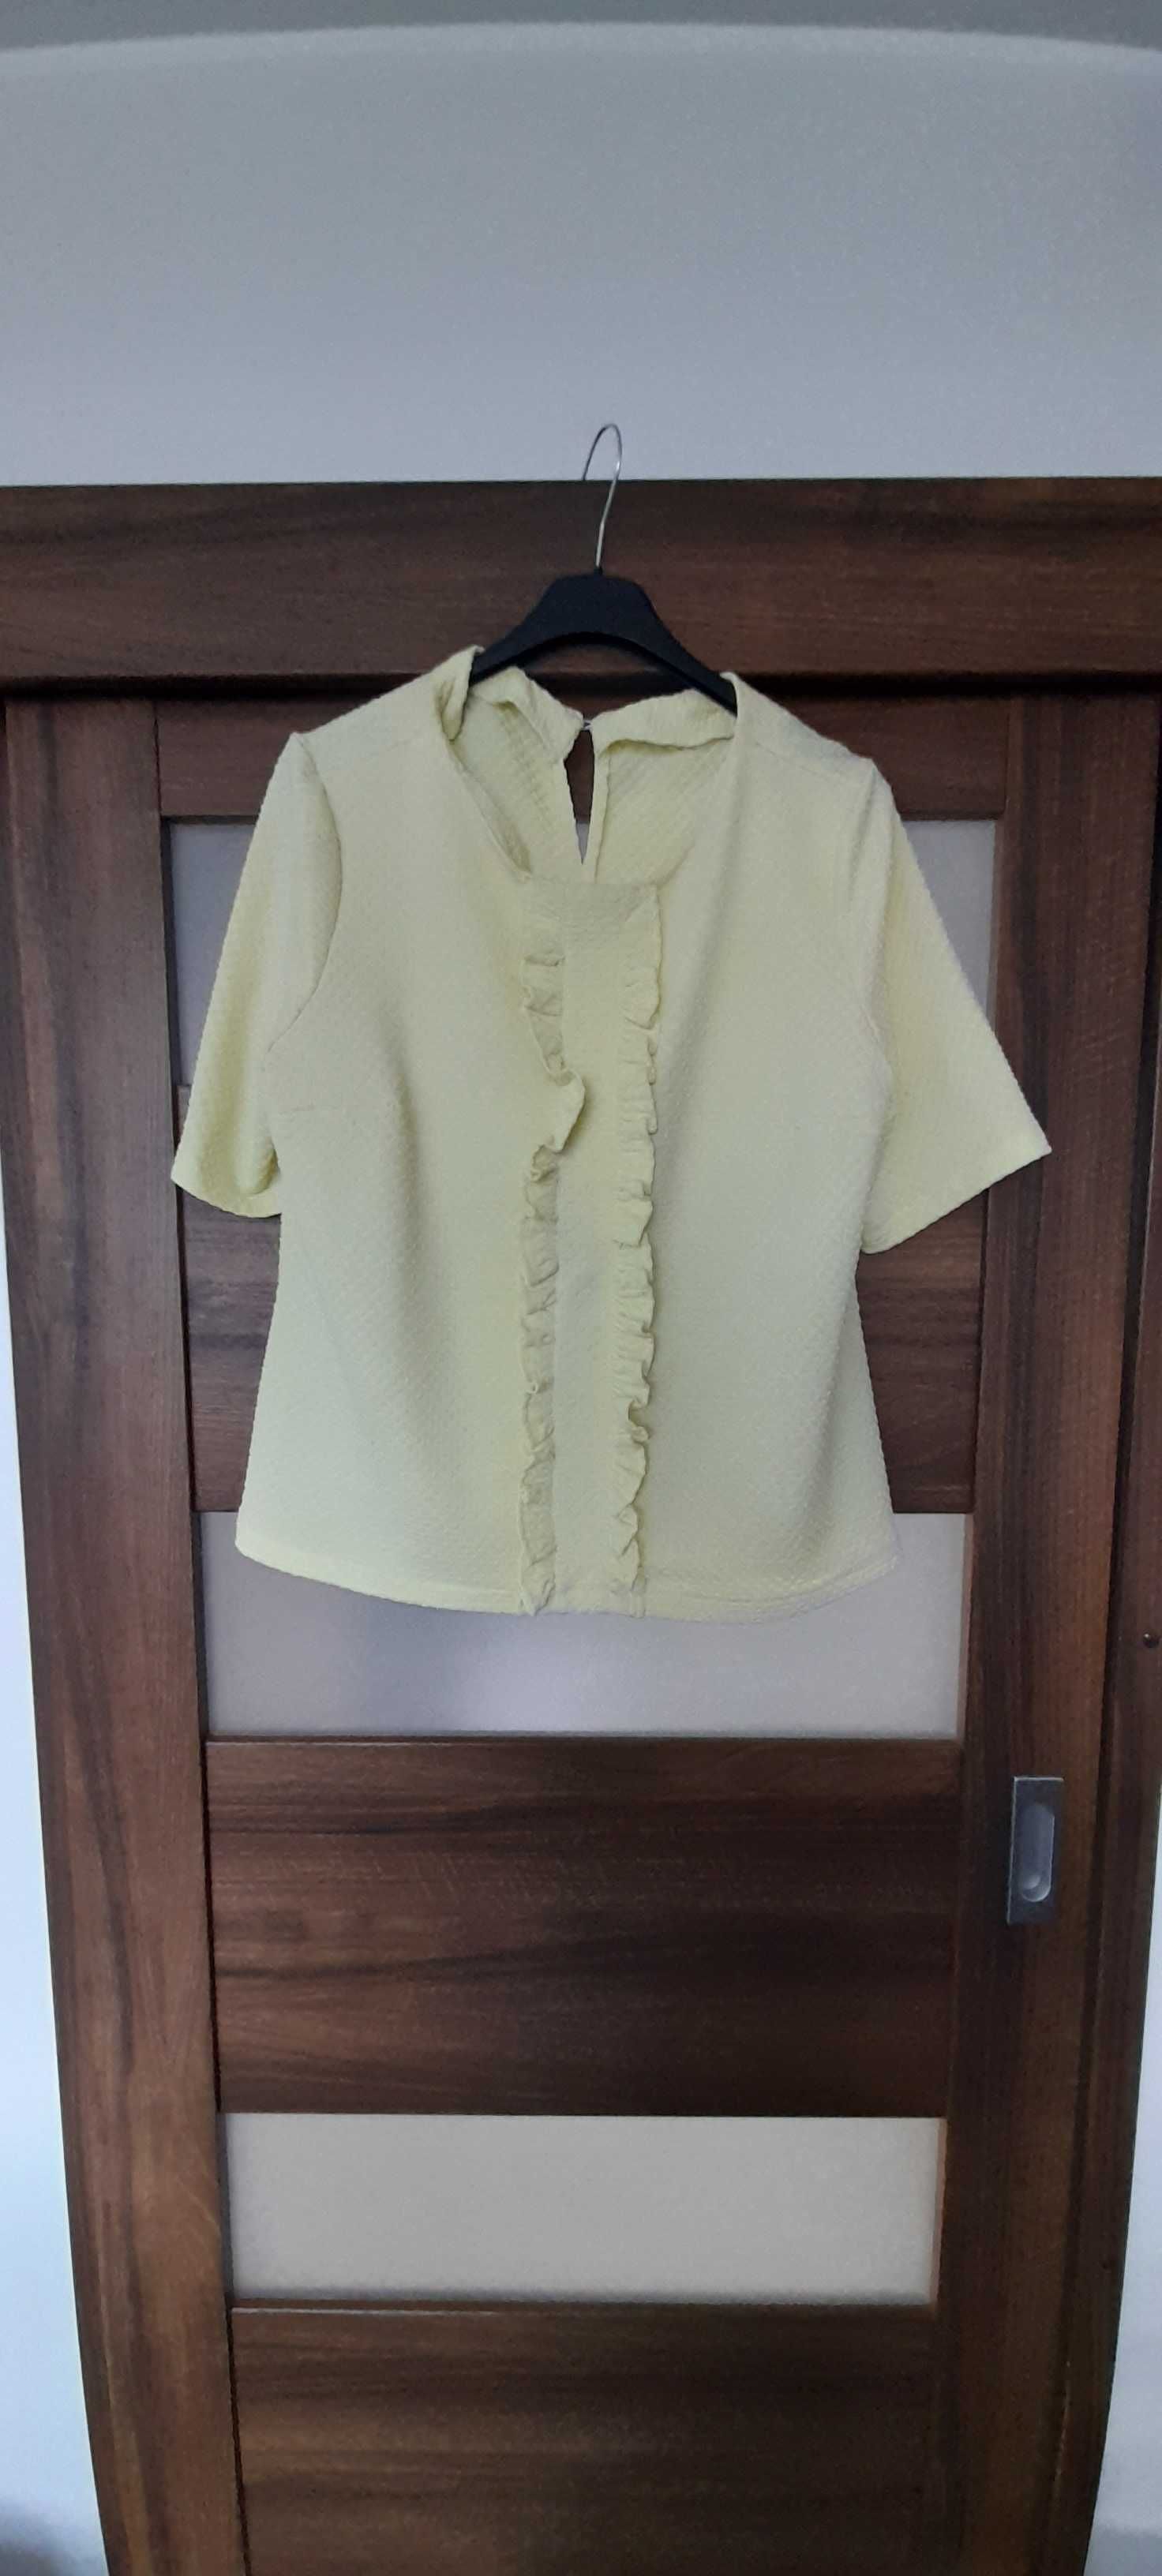 Bluza bluzka damska żółta pod pachami 140cm roz.150 cm dł,60 cm